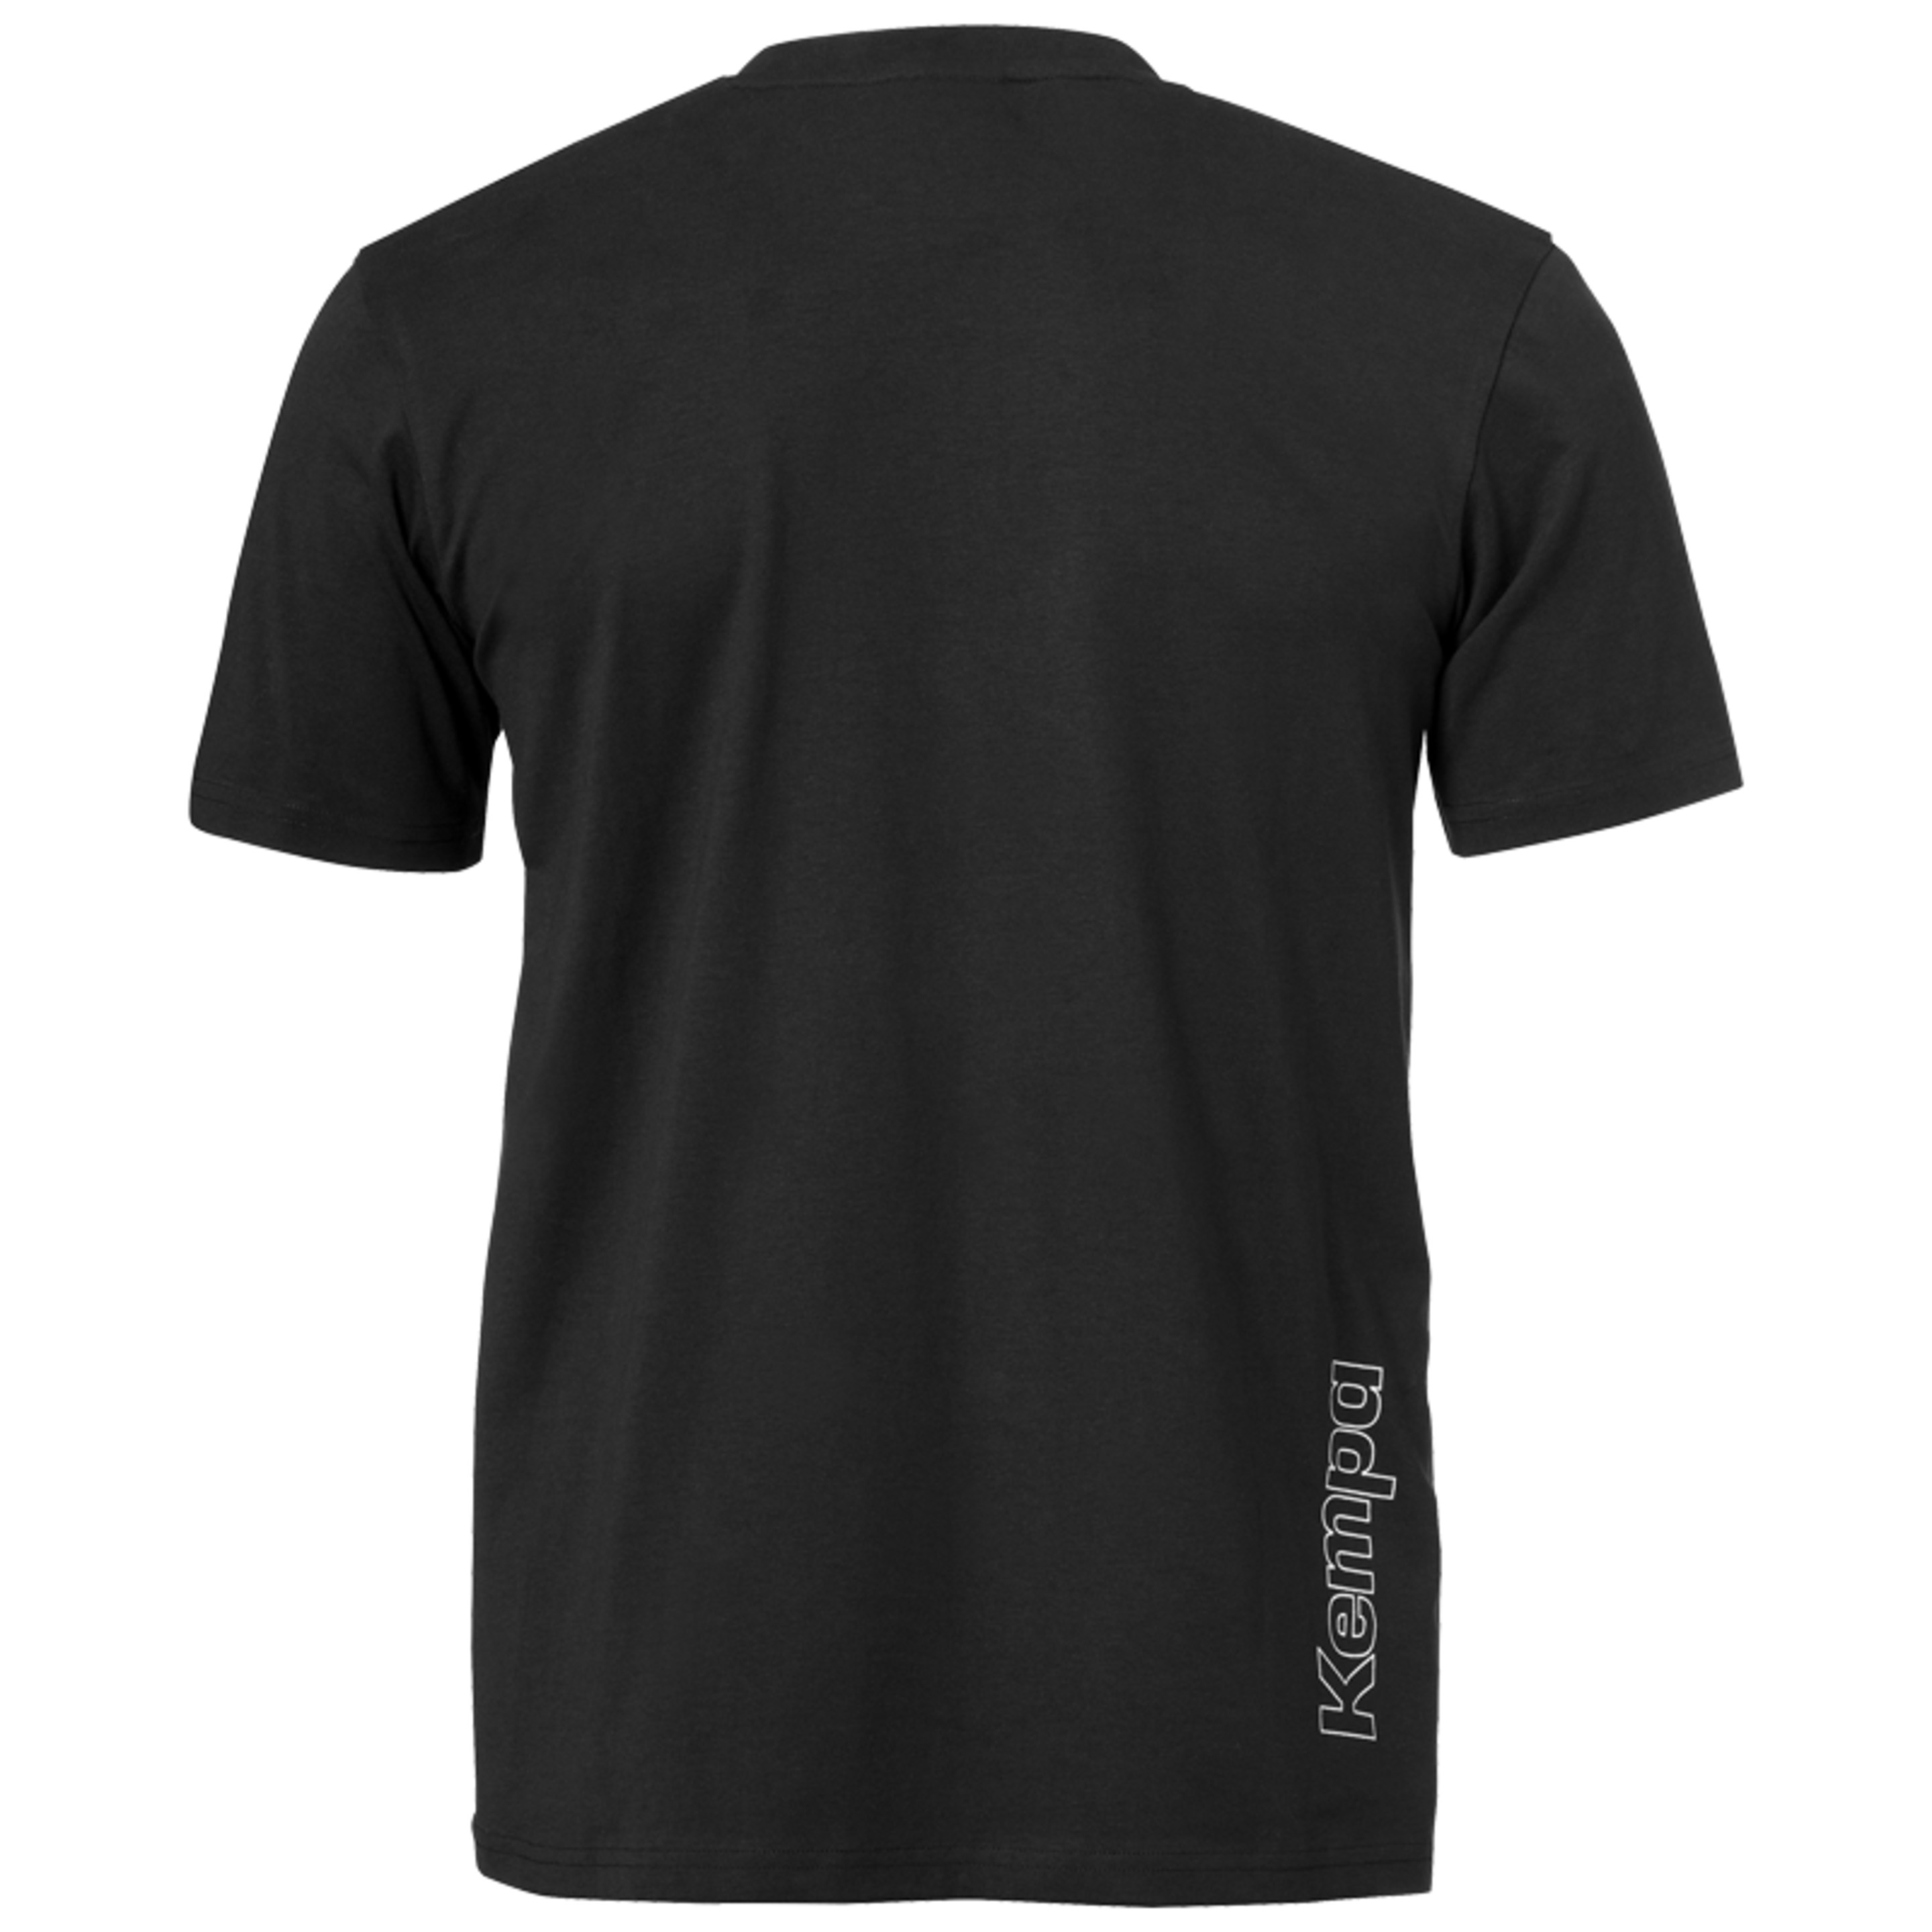 Core 2.0 T-shirt Negro Kempa